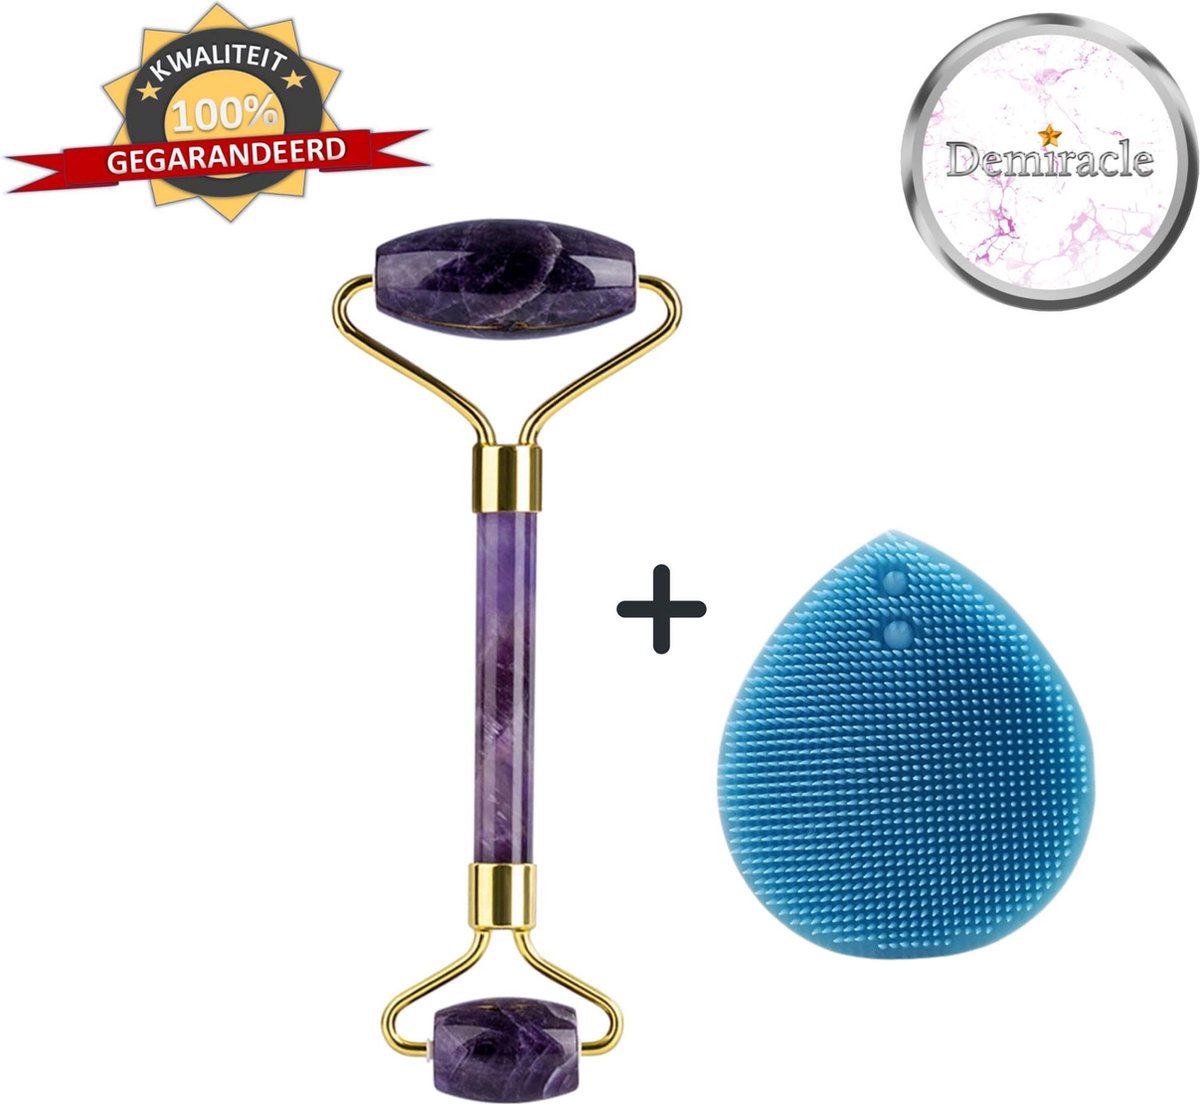 Demiracle Amethist Face Roller met Blauwe Siliconen Gezichtsborstel - Cadeau - Gezichtsroller - Massage Roller - Jade Roller - Rimpelverwijdering - Ontspanning - Kwaliteit